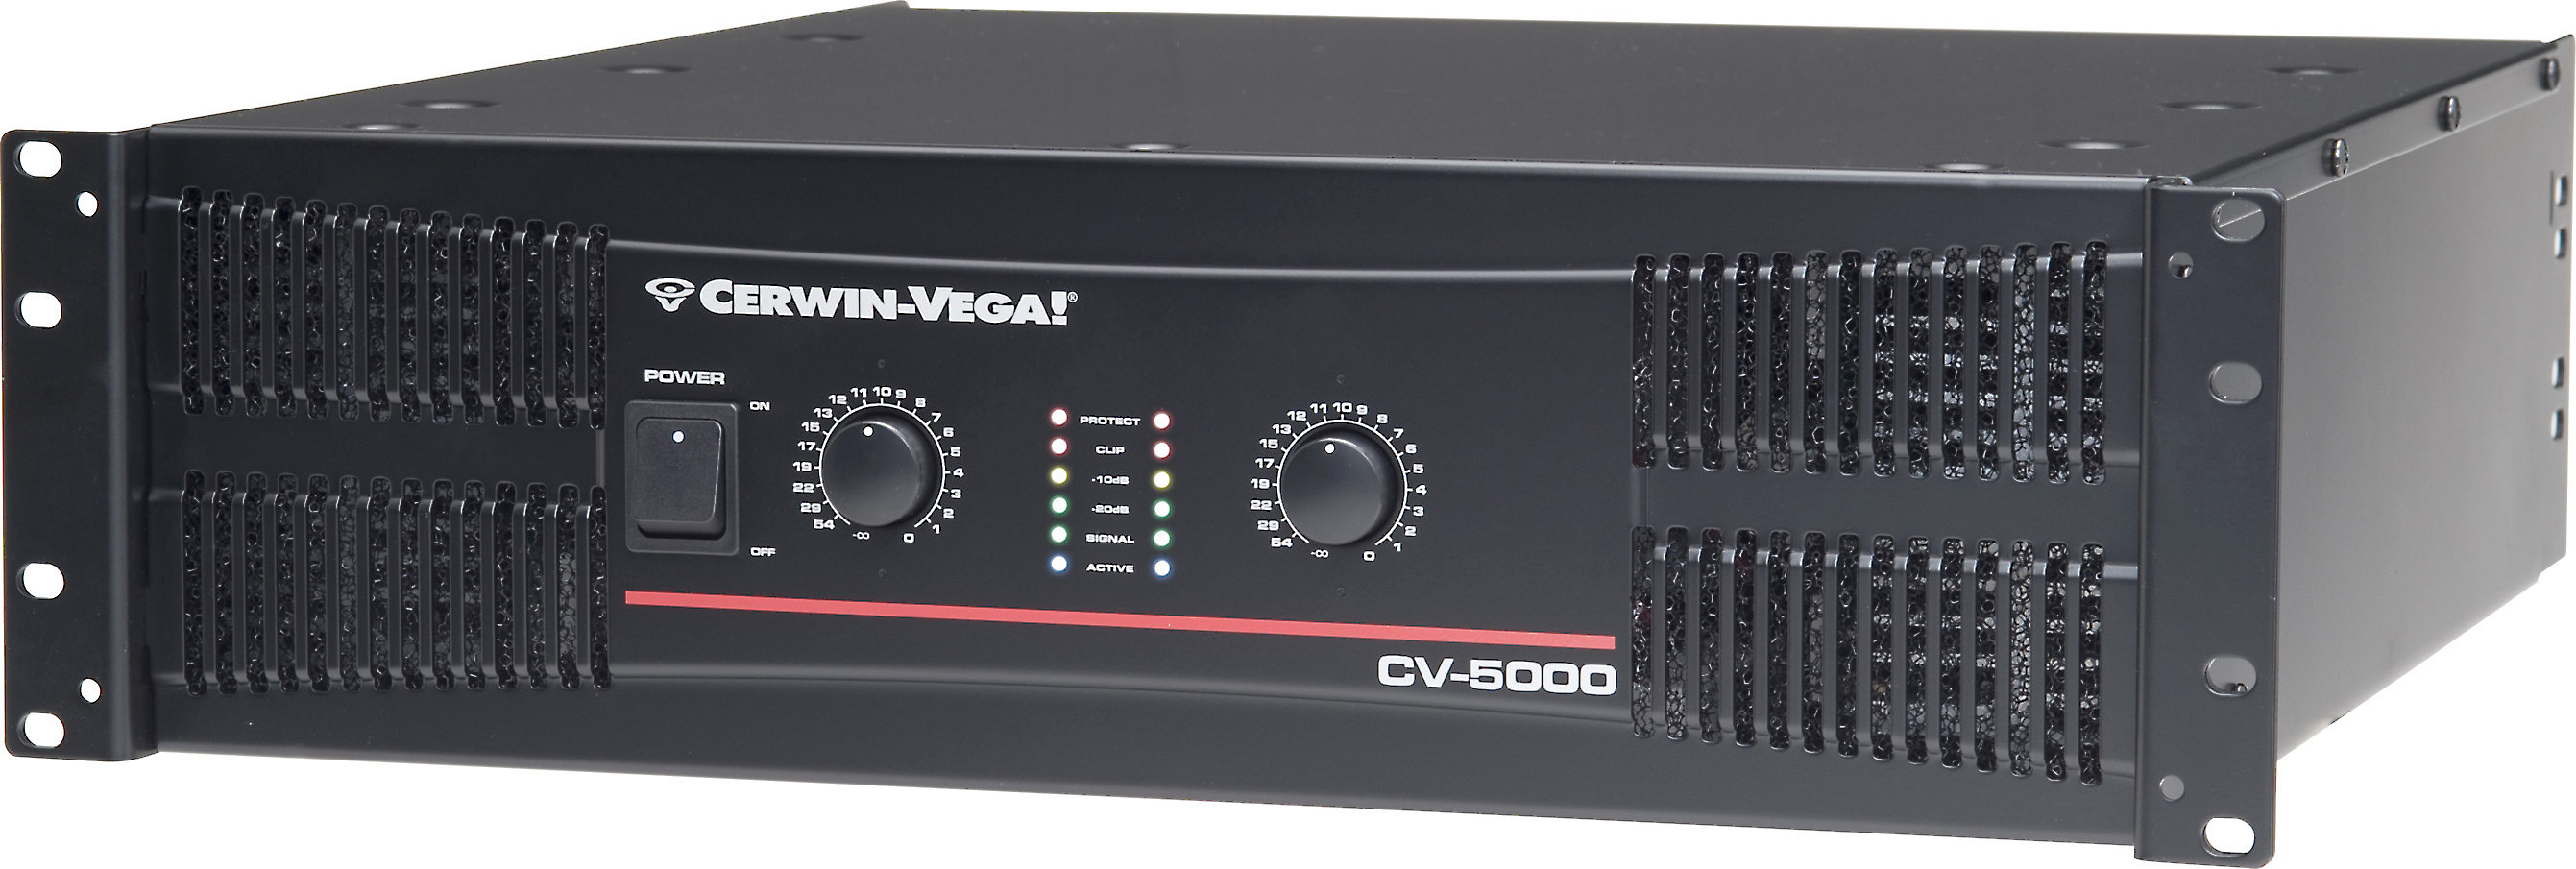 Cerwin-Vega CV-5000 Power amplifier 